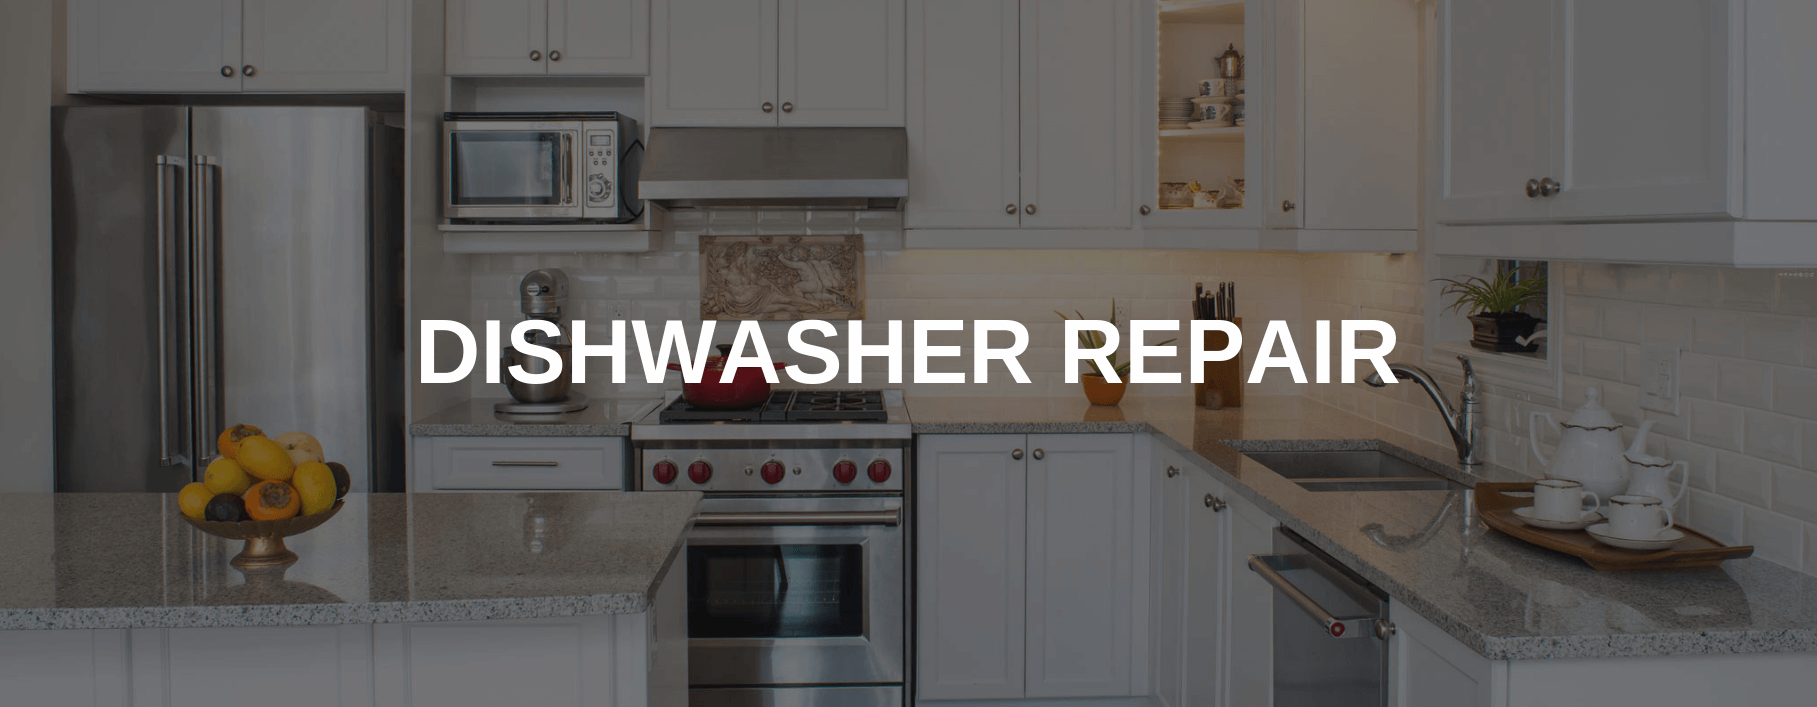 dishwasher repair san diego